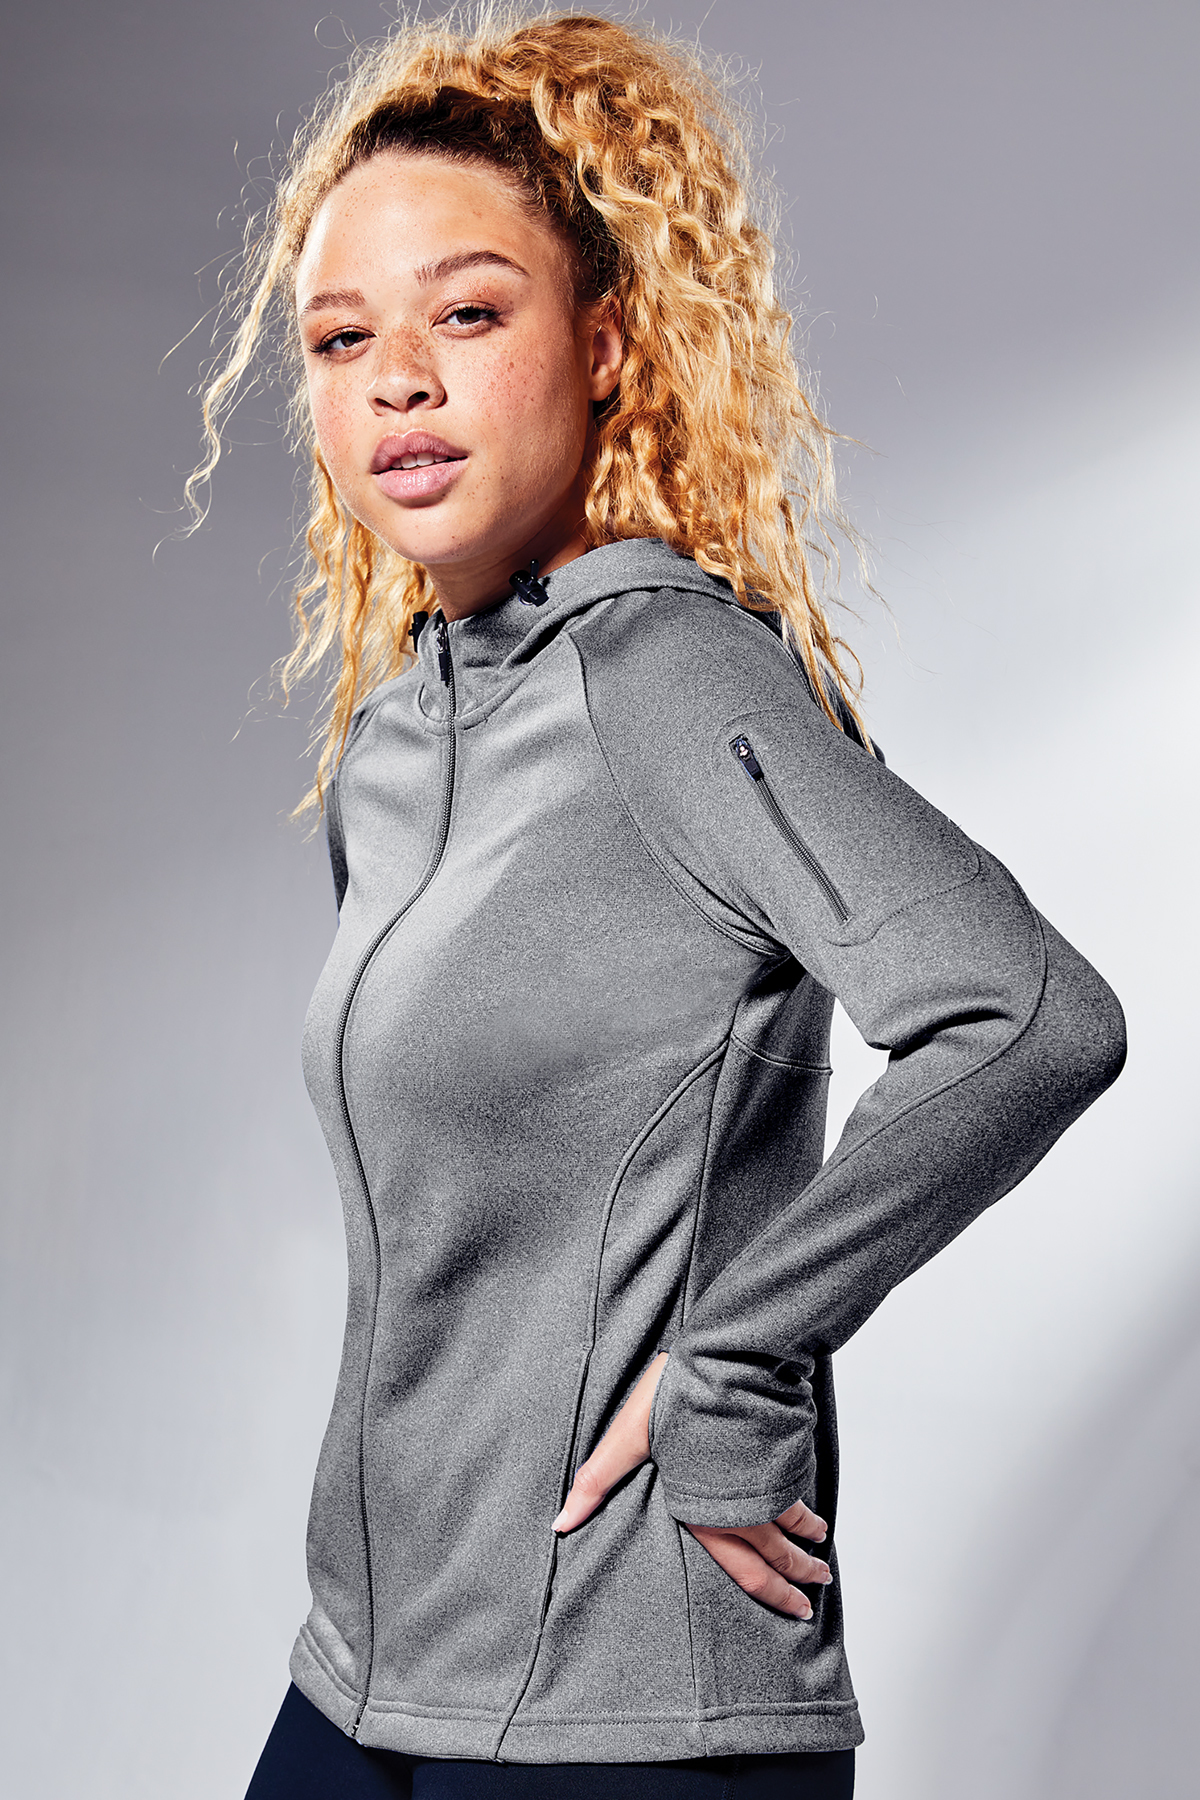 Sport-Tek Ladies Tech Fleece Full-Zip Hooded Jacket, Product